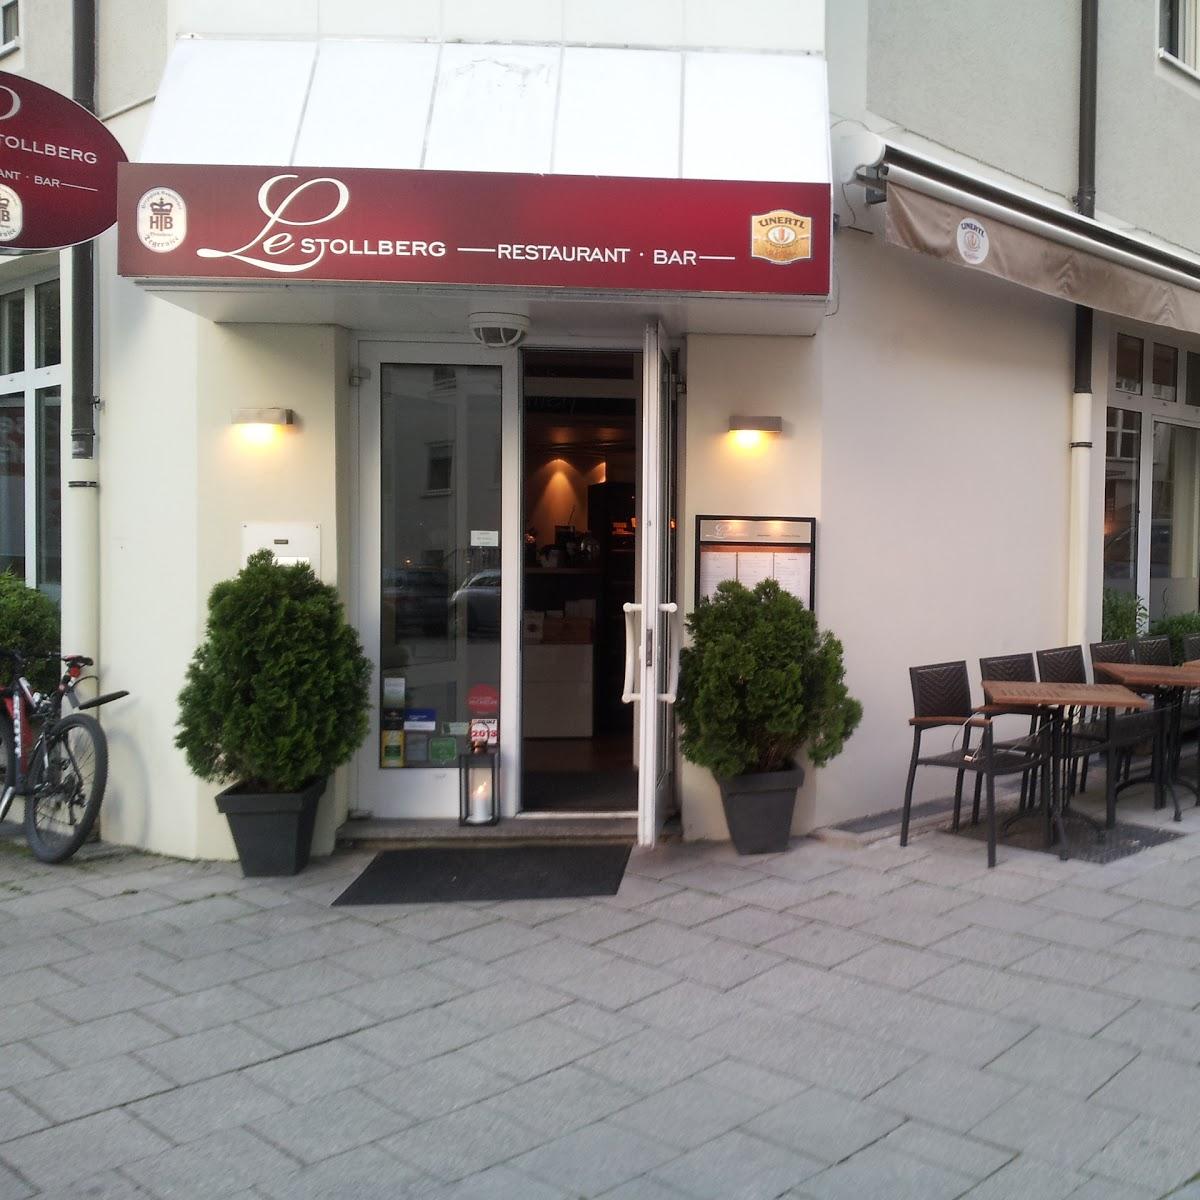 Restaurant "Le Stollberg" in  München